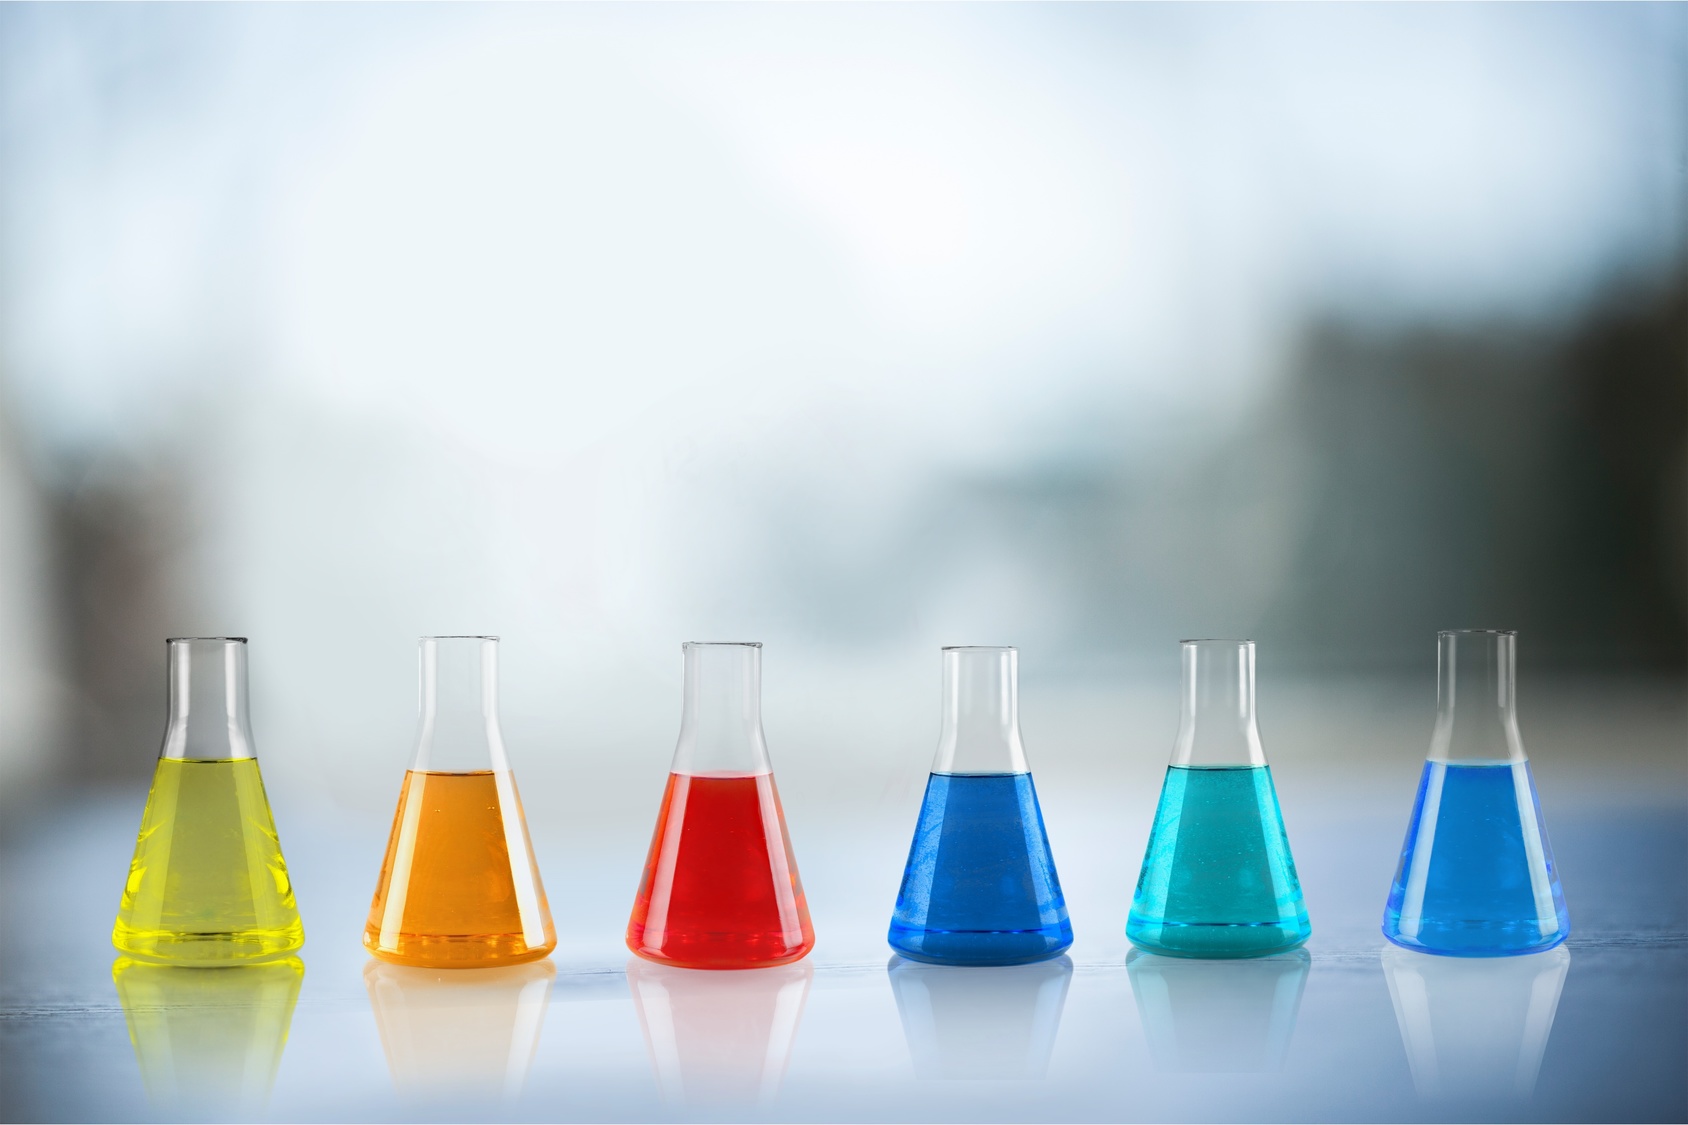 De nombreux produits chimiques naturels et artificiels servent de colorants. © BillionPhotos.com